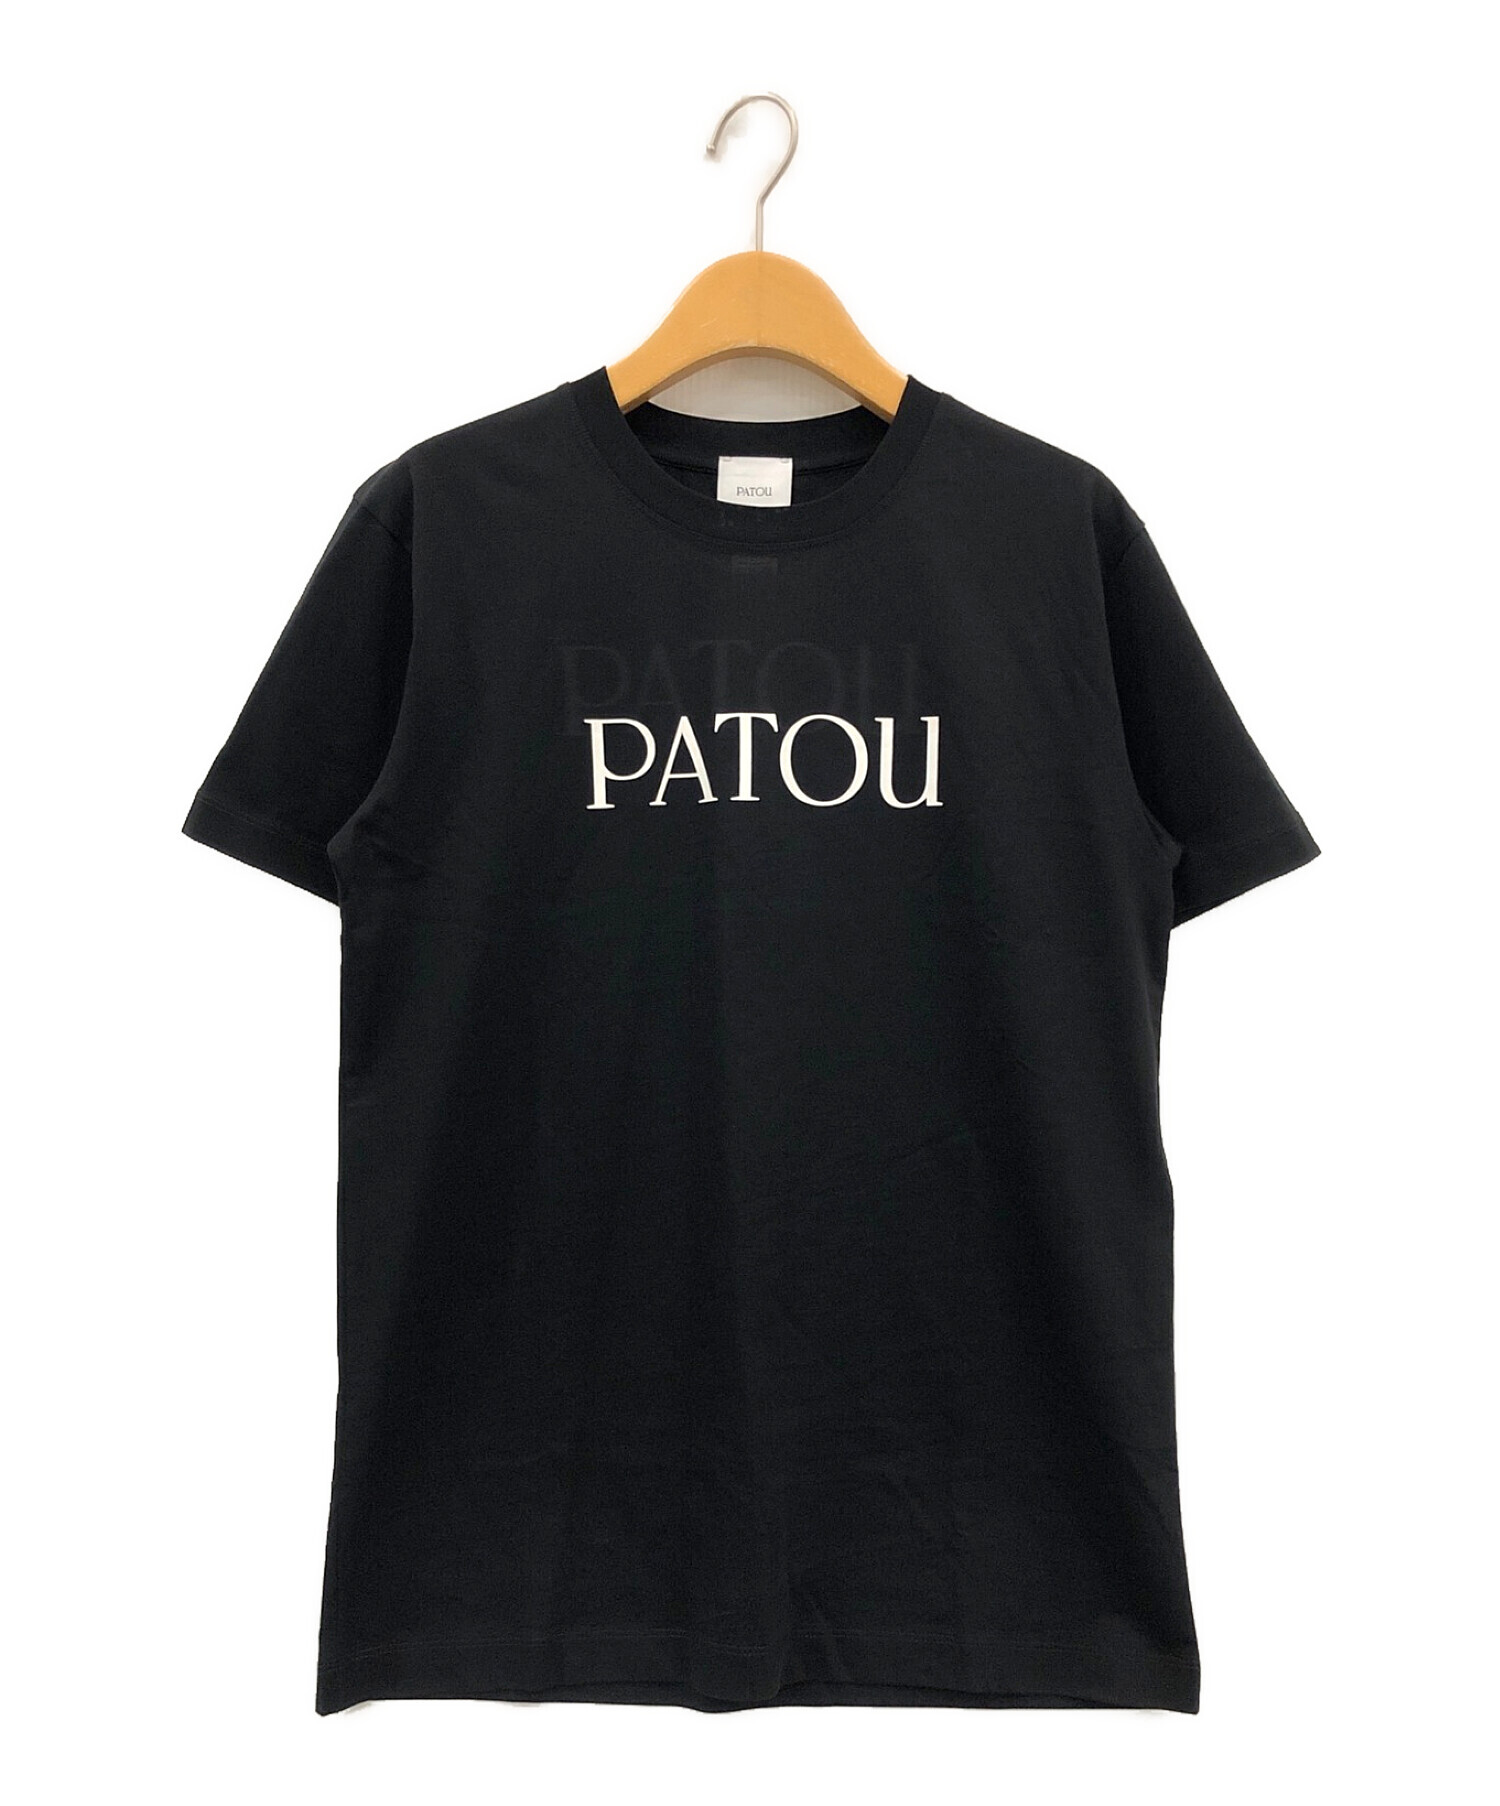 patou (パトゥ) オーガニックコットン パトゥロゴTシャツ ブラック サイズ:XS